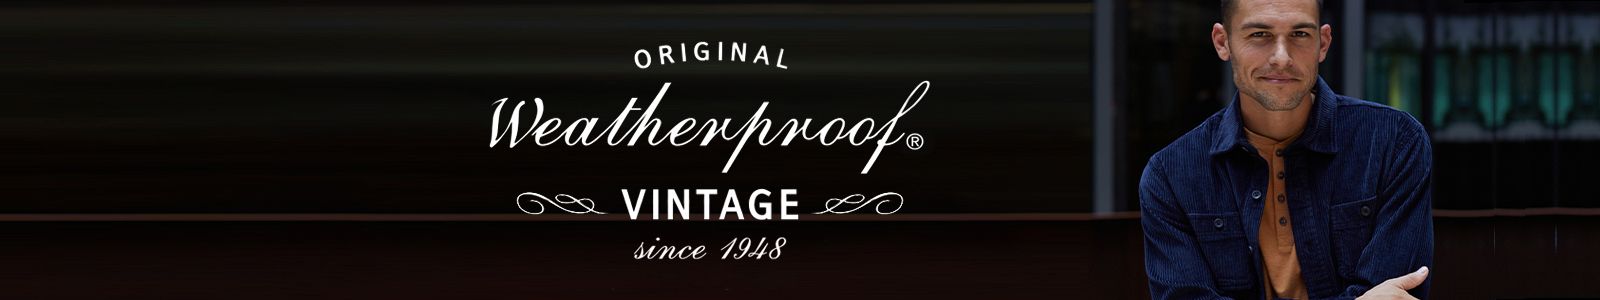 Original, Weatherproof, Vintage, Since 1948